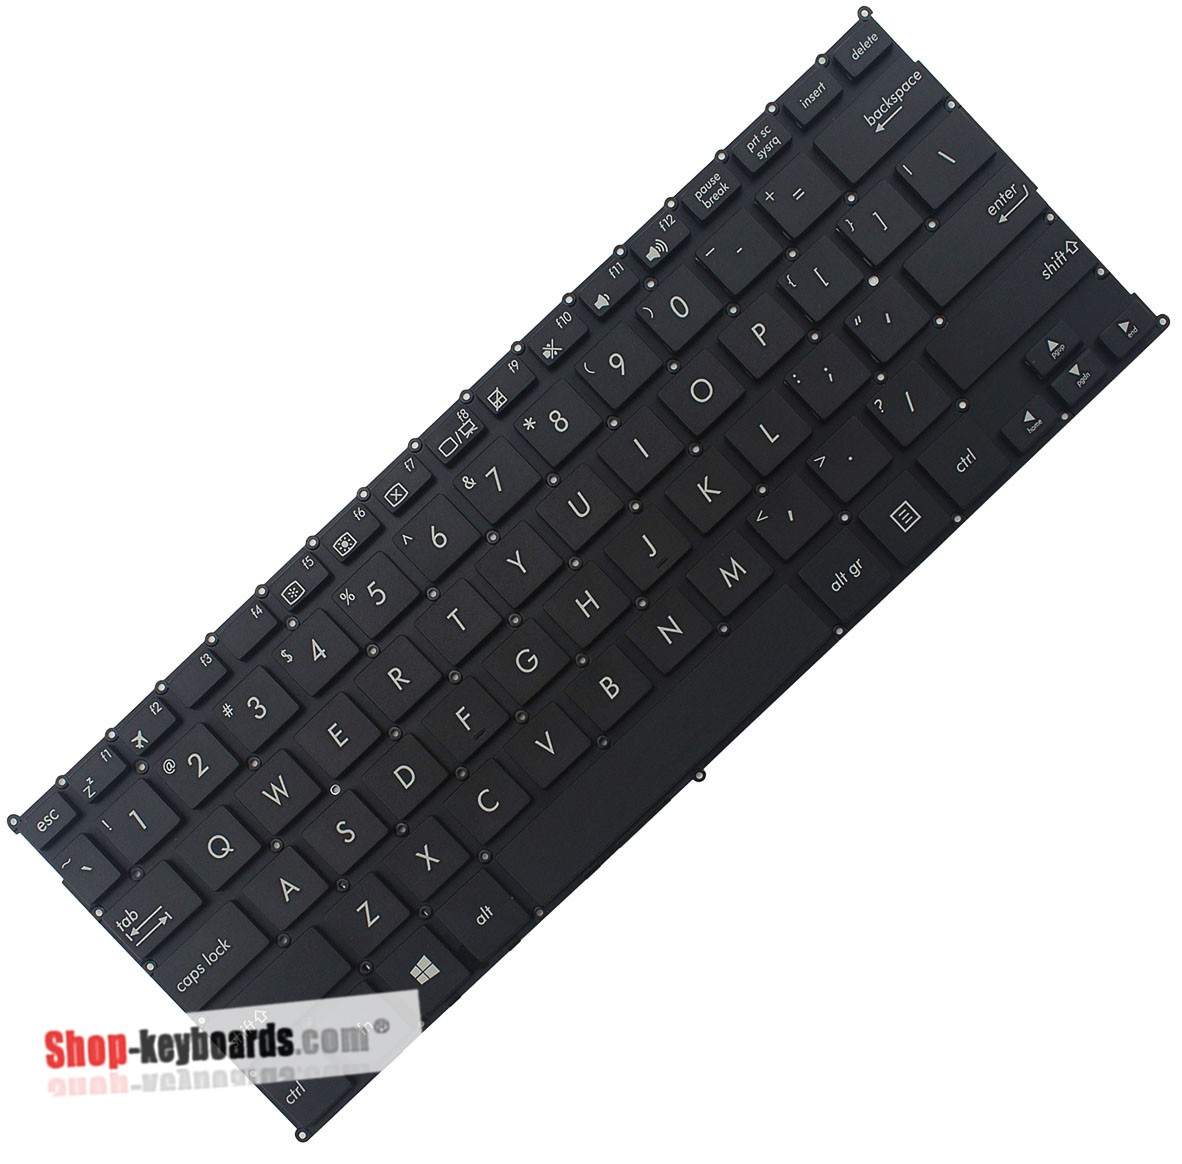 Asus R200 Keyboard replacement